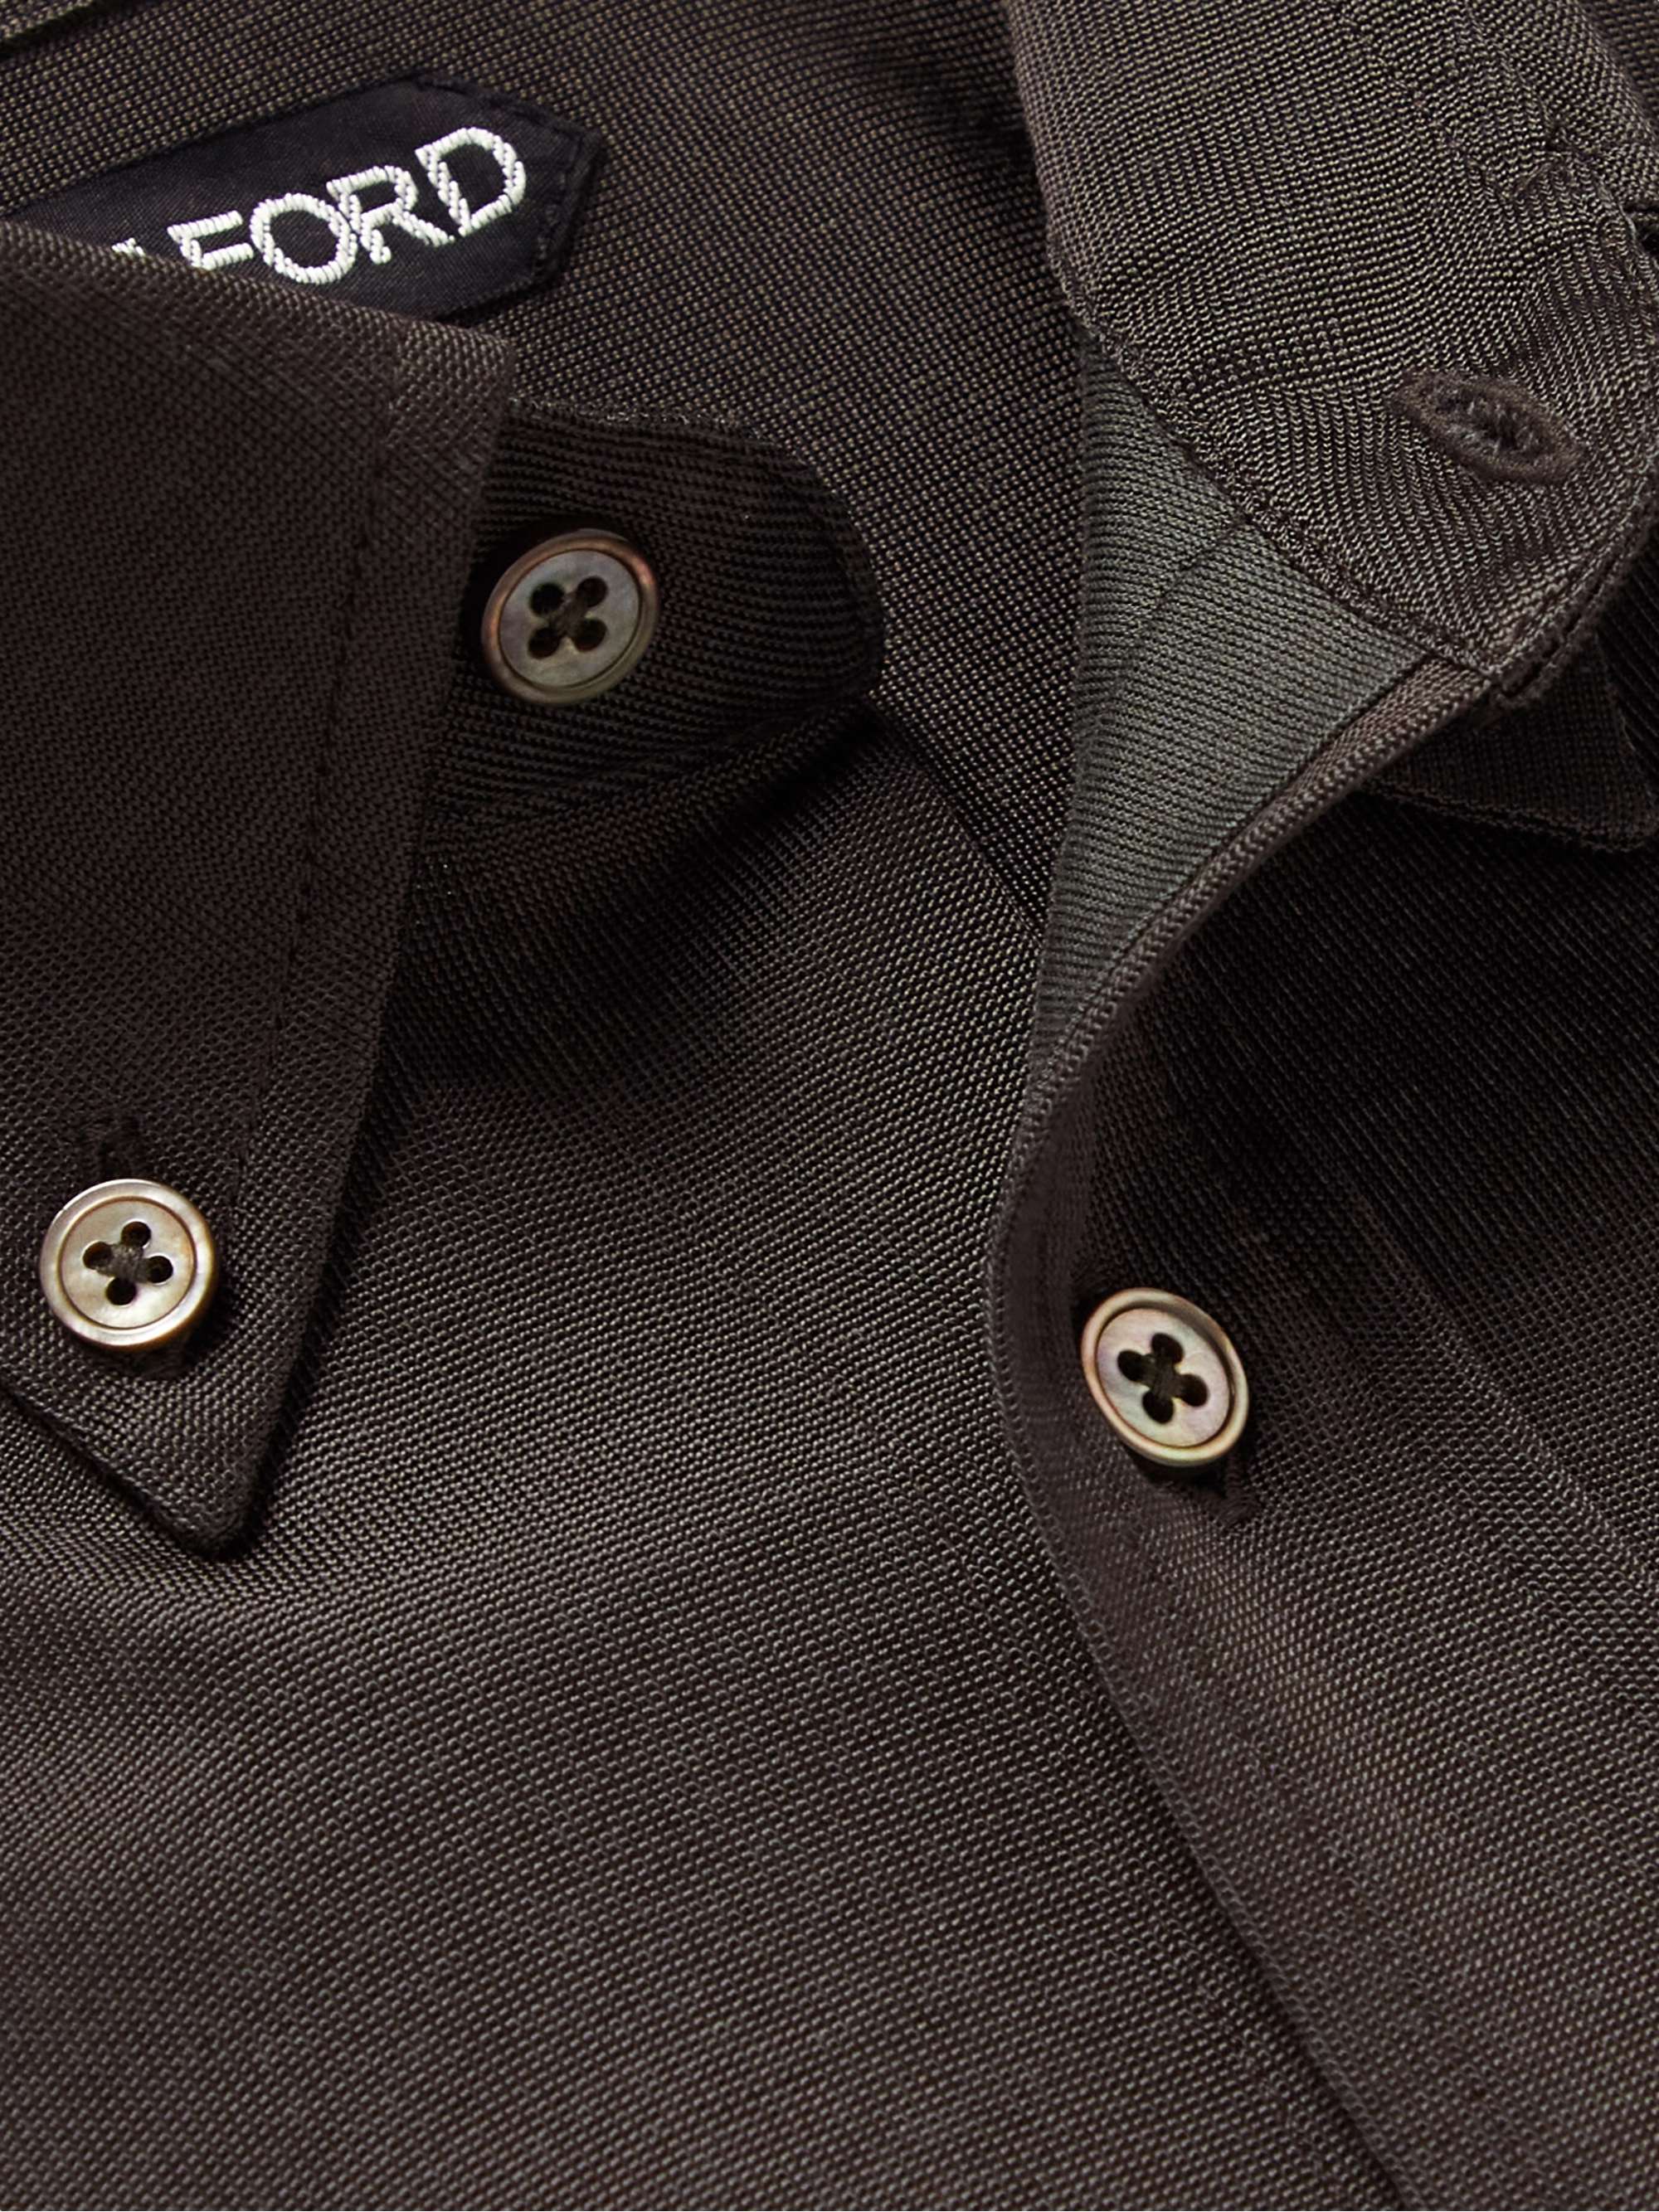 TOM FORD Button-Down Collar Satin-Jersey Shirt